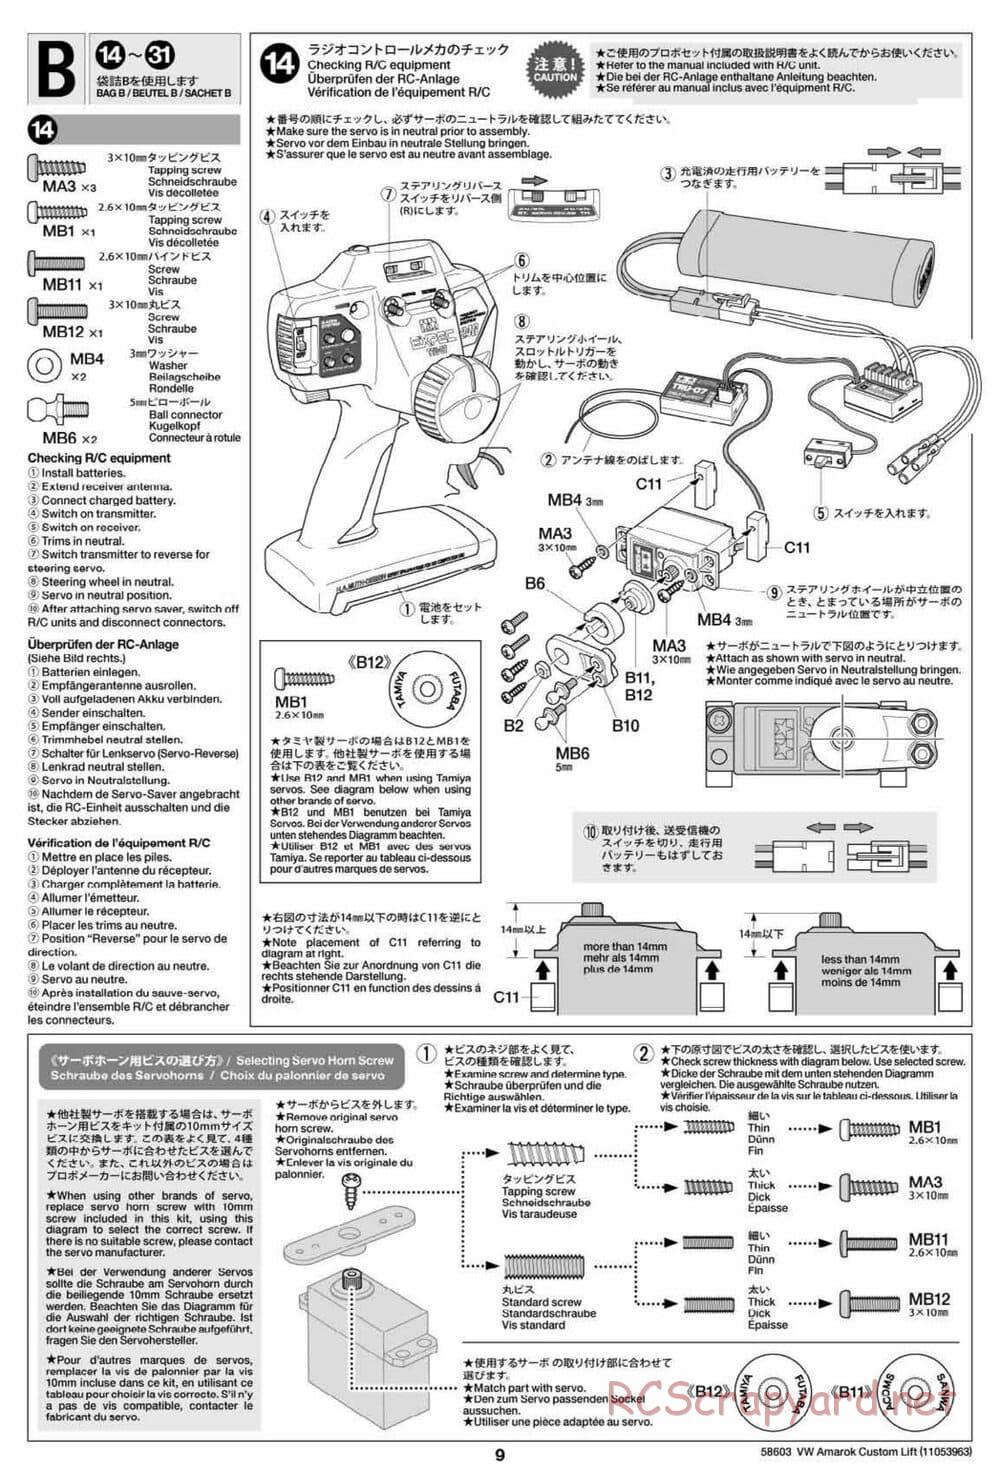 Tamiya - Volkswagen Amarok Custom Lift - WT-01N Chassis - Manual - Page 9